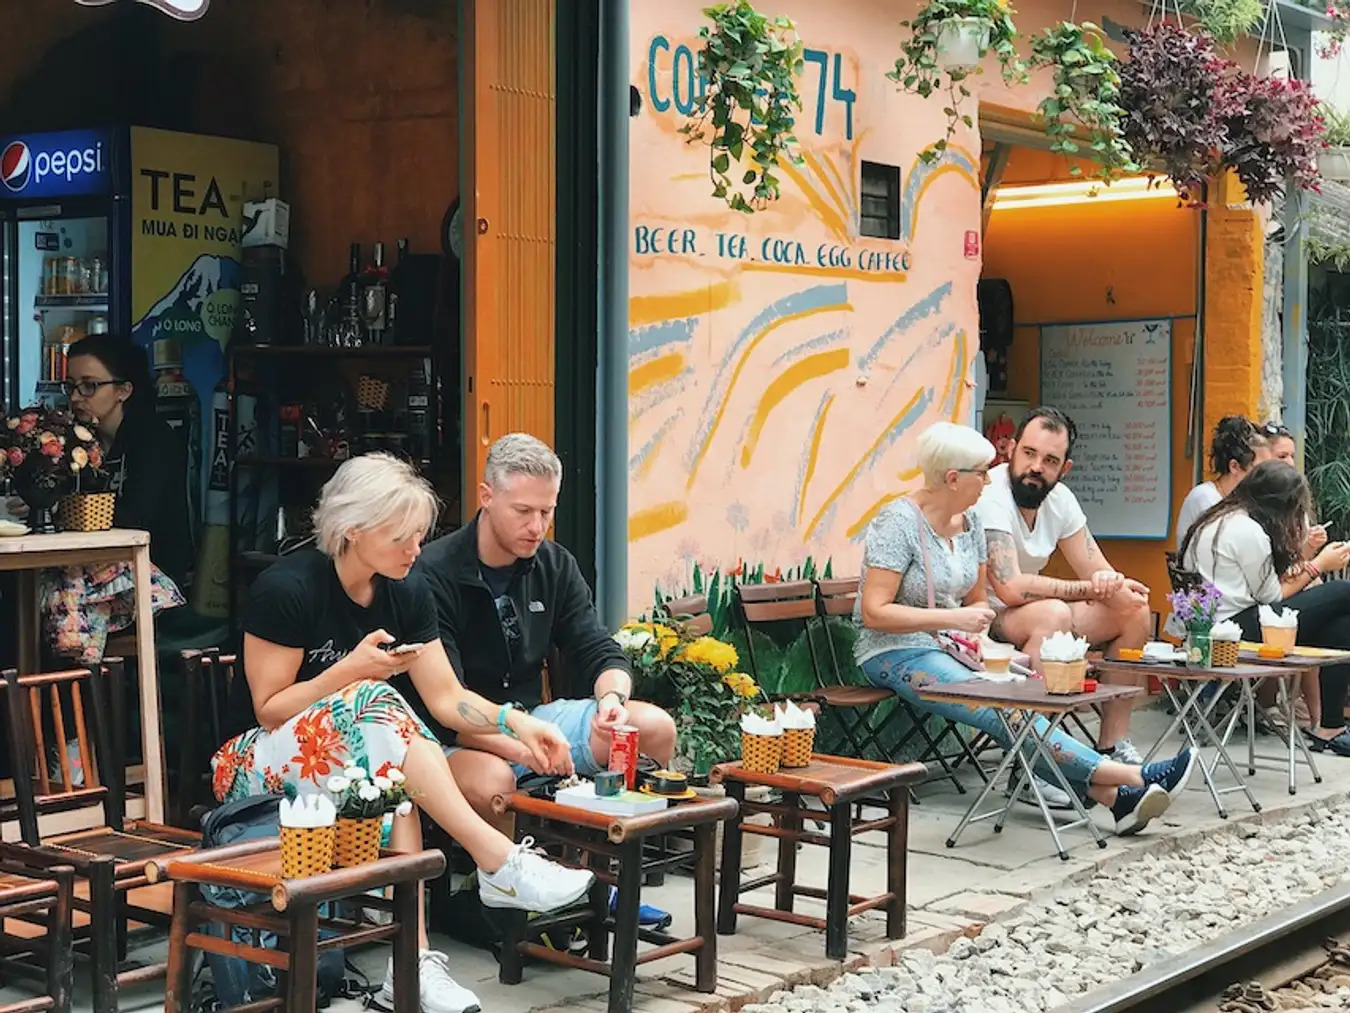 The Train Street Coffee in Hanoi